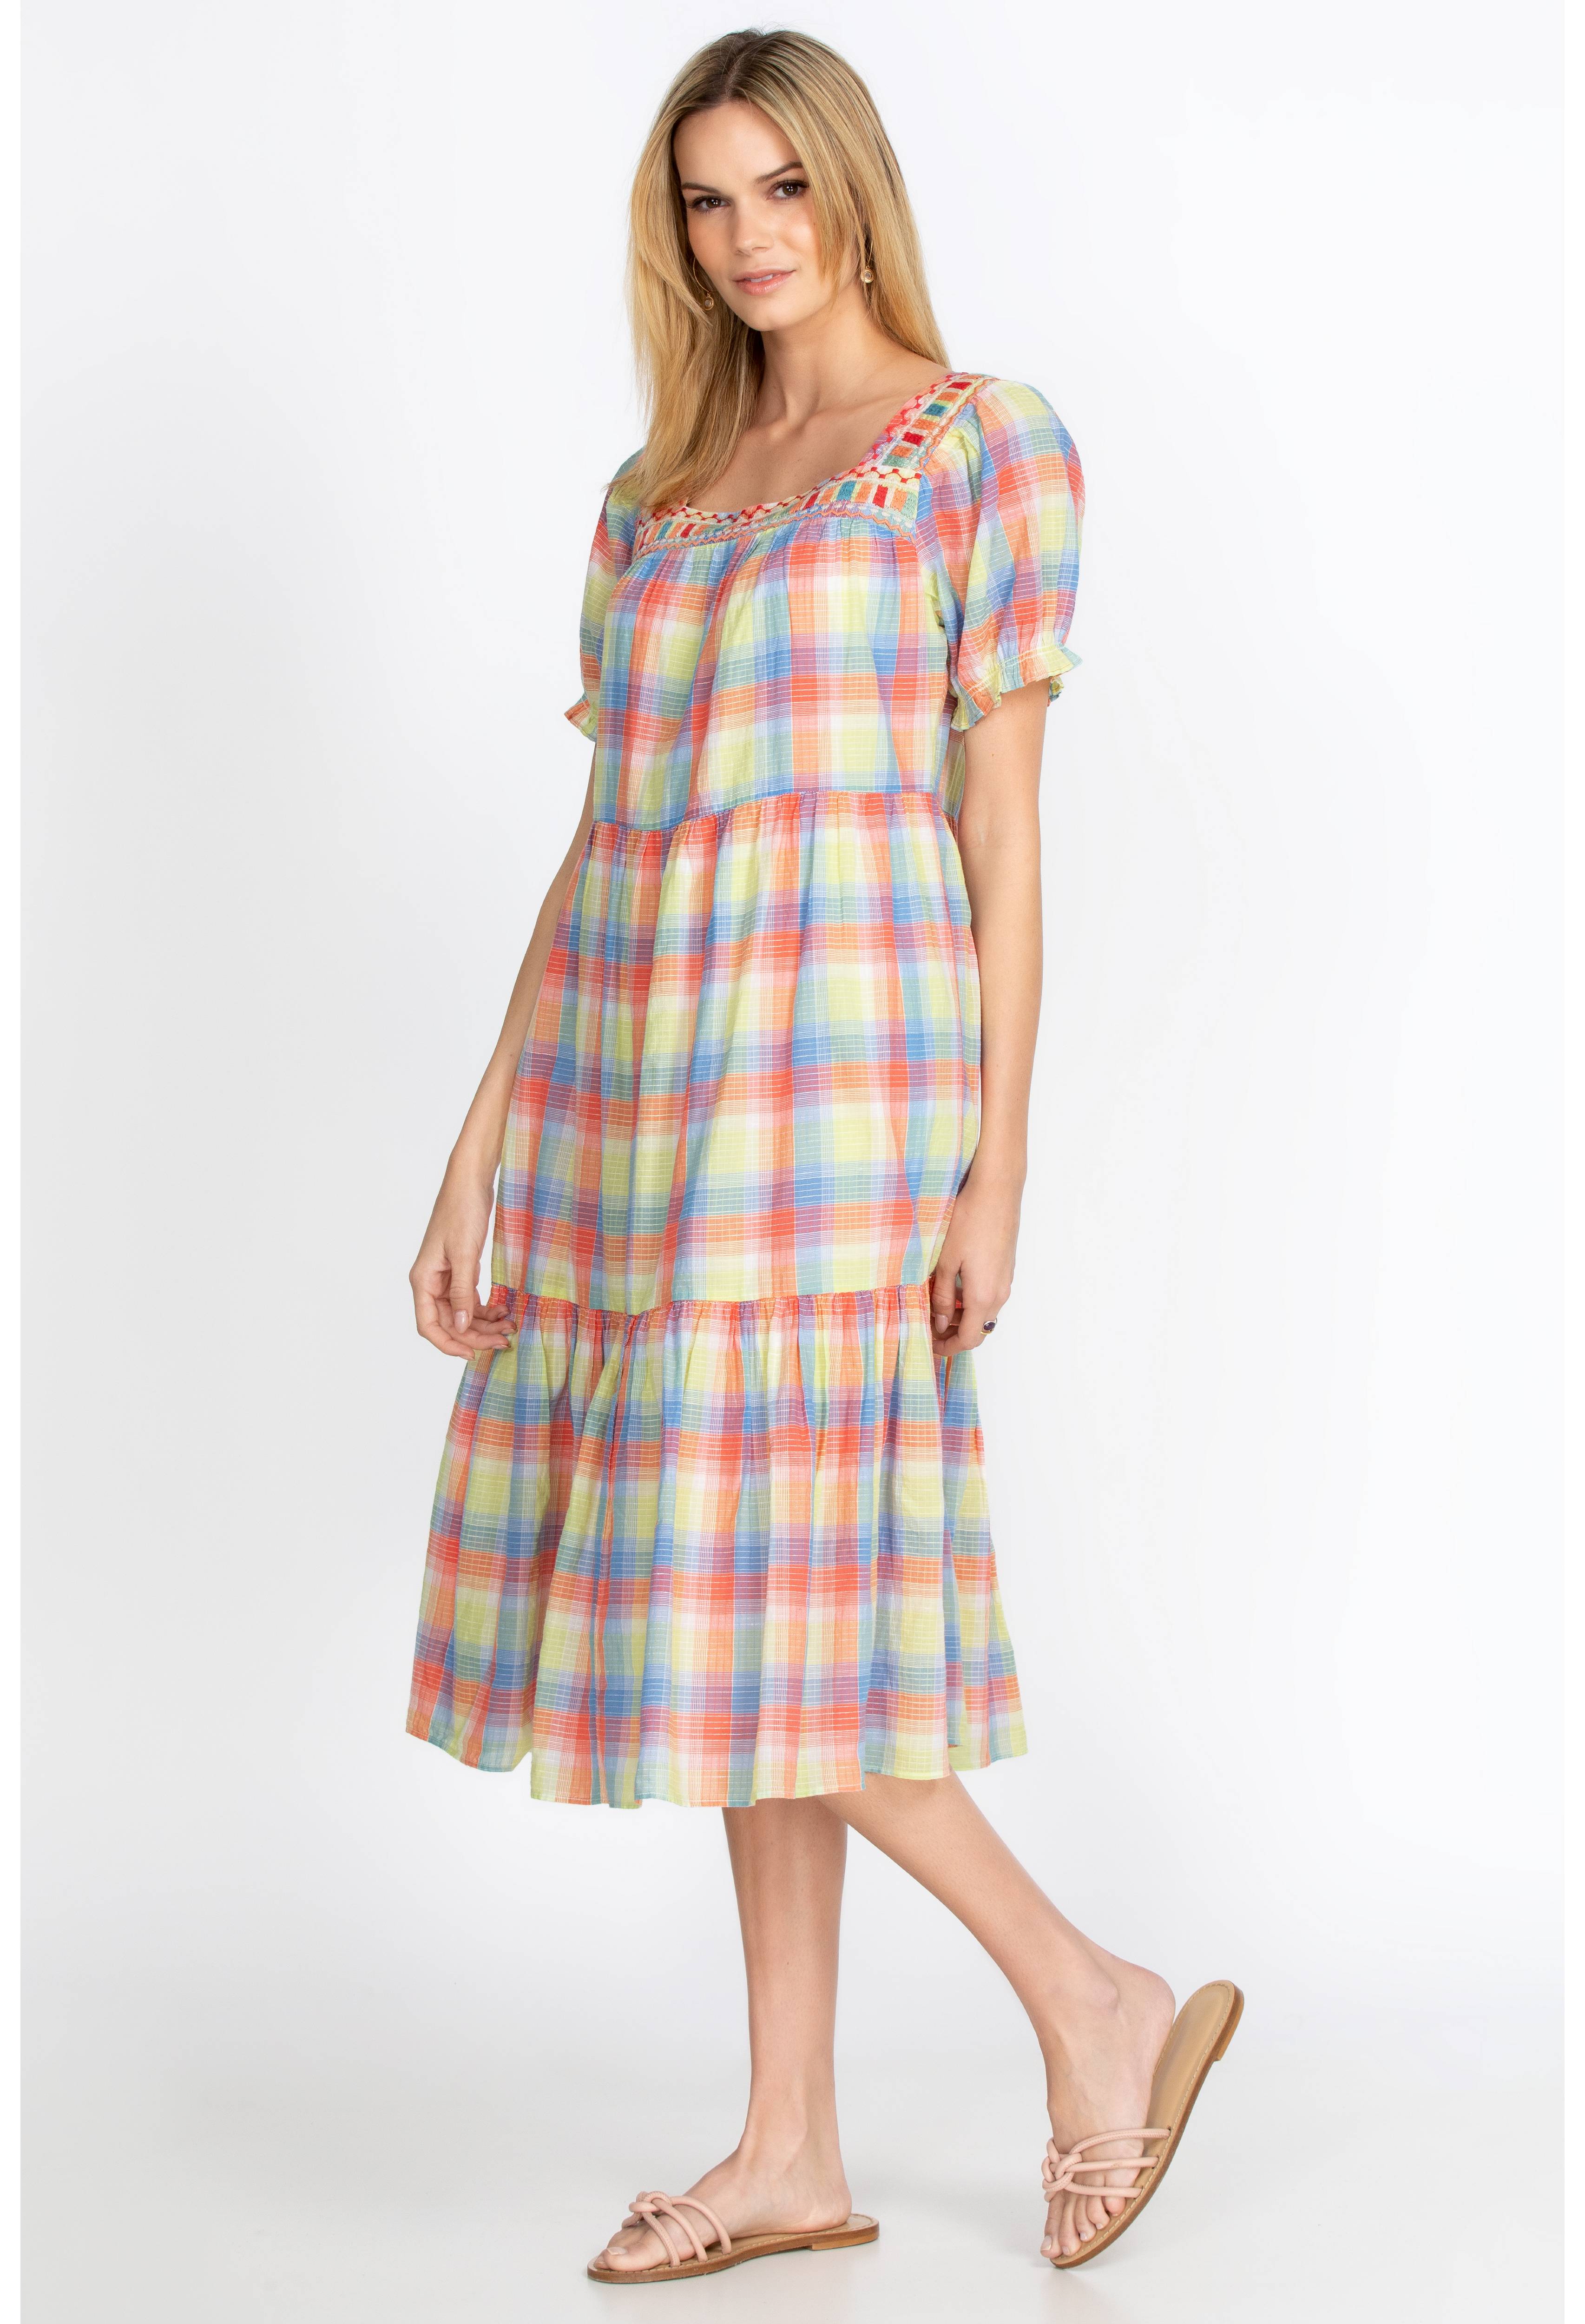 Delacey Plaid Square Neck Midi Dress, , large image number 2